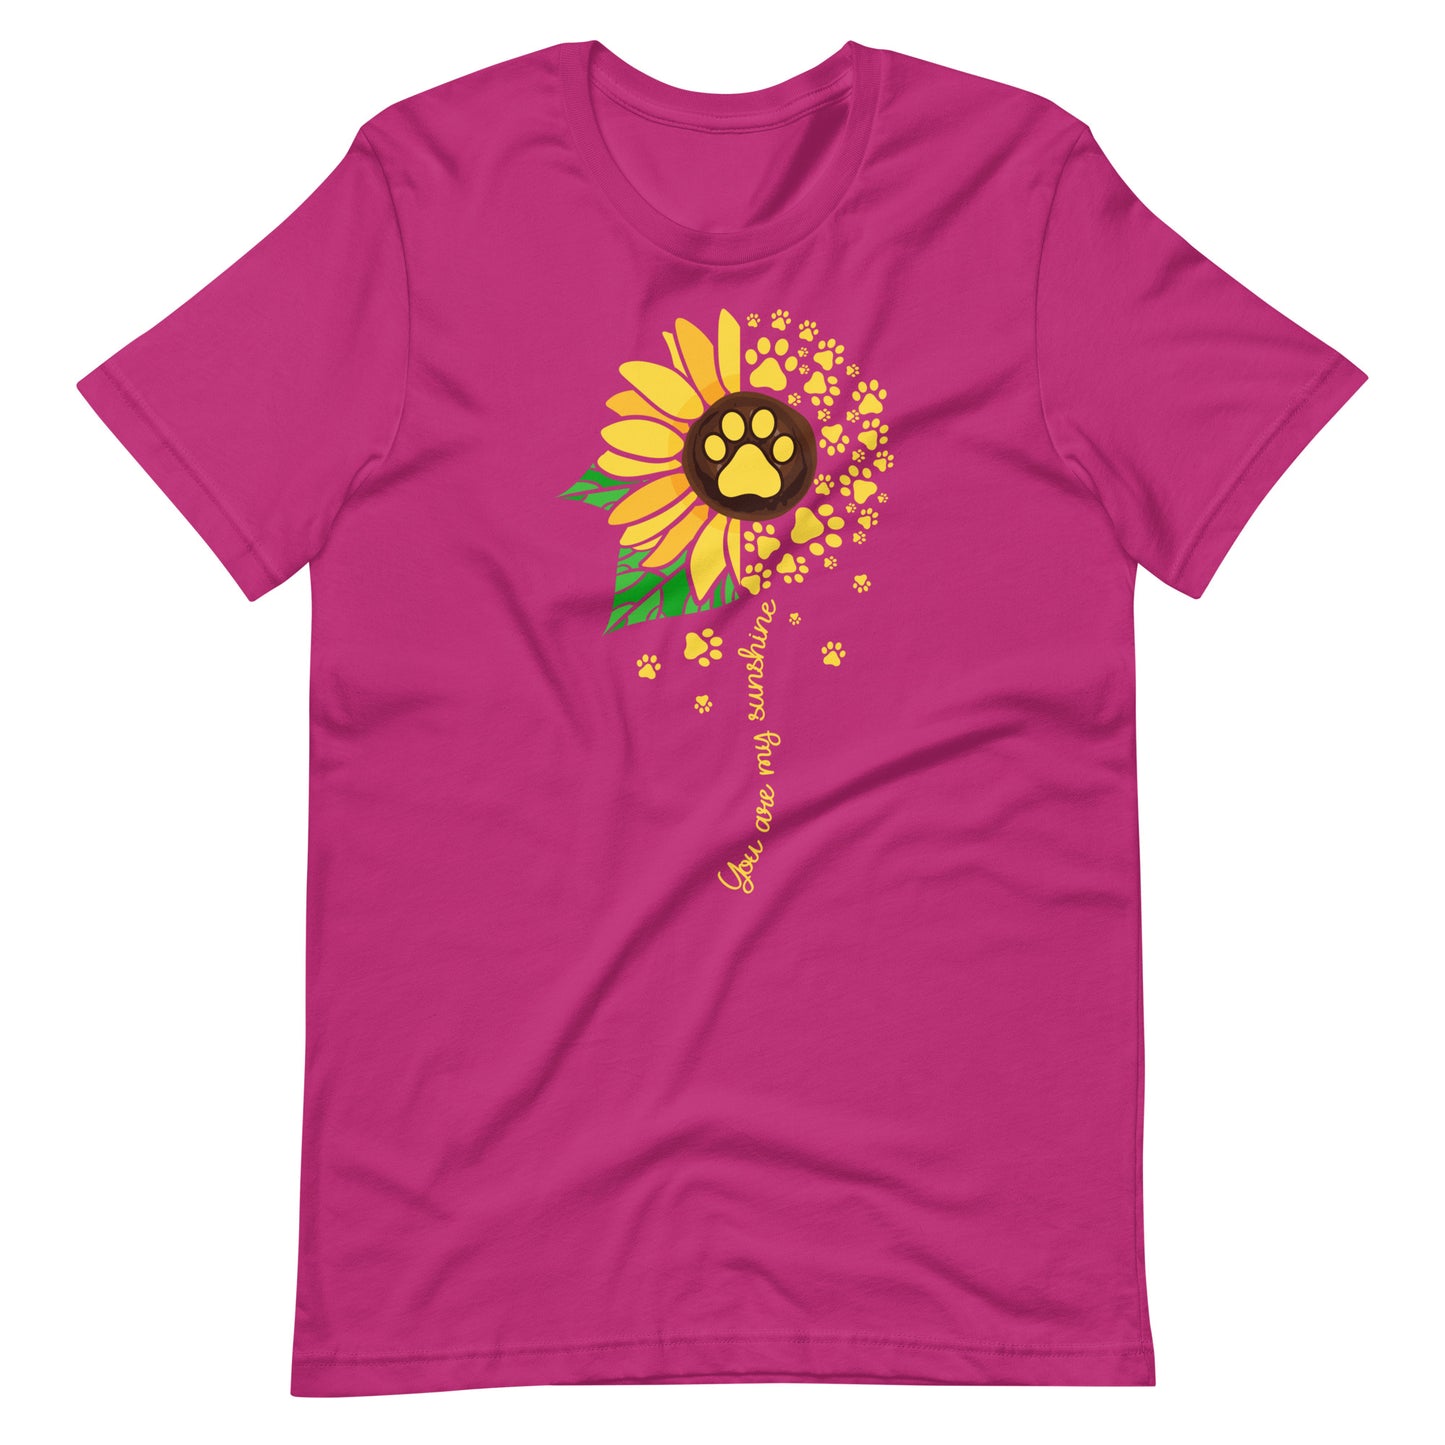 You are My Sunshine Paw Print Sunflower T-Shirt